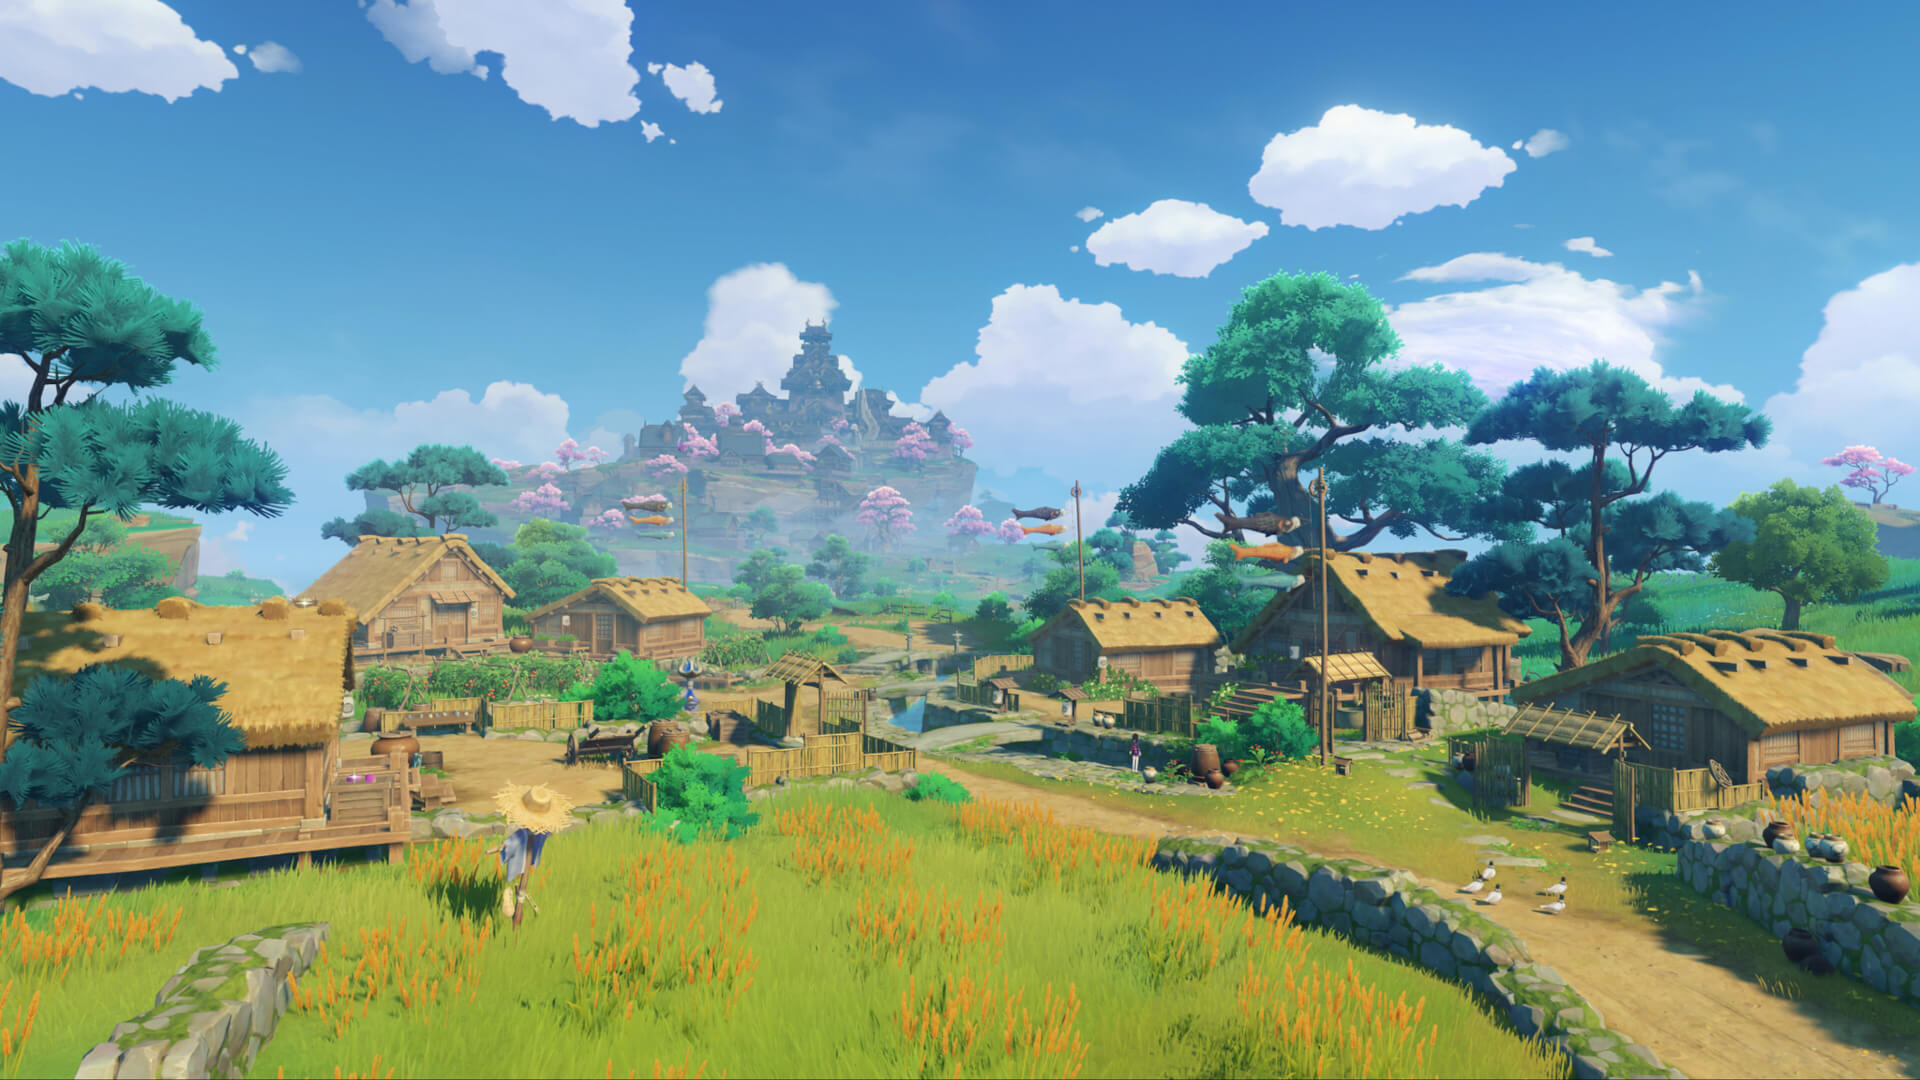 A serene village scene in the new Genshin Impact 2.0 update